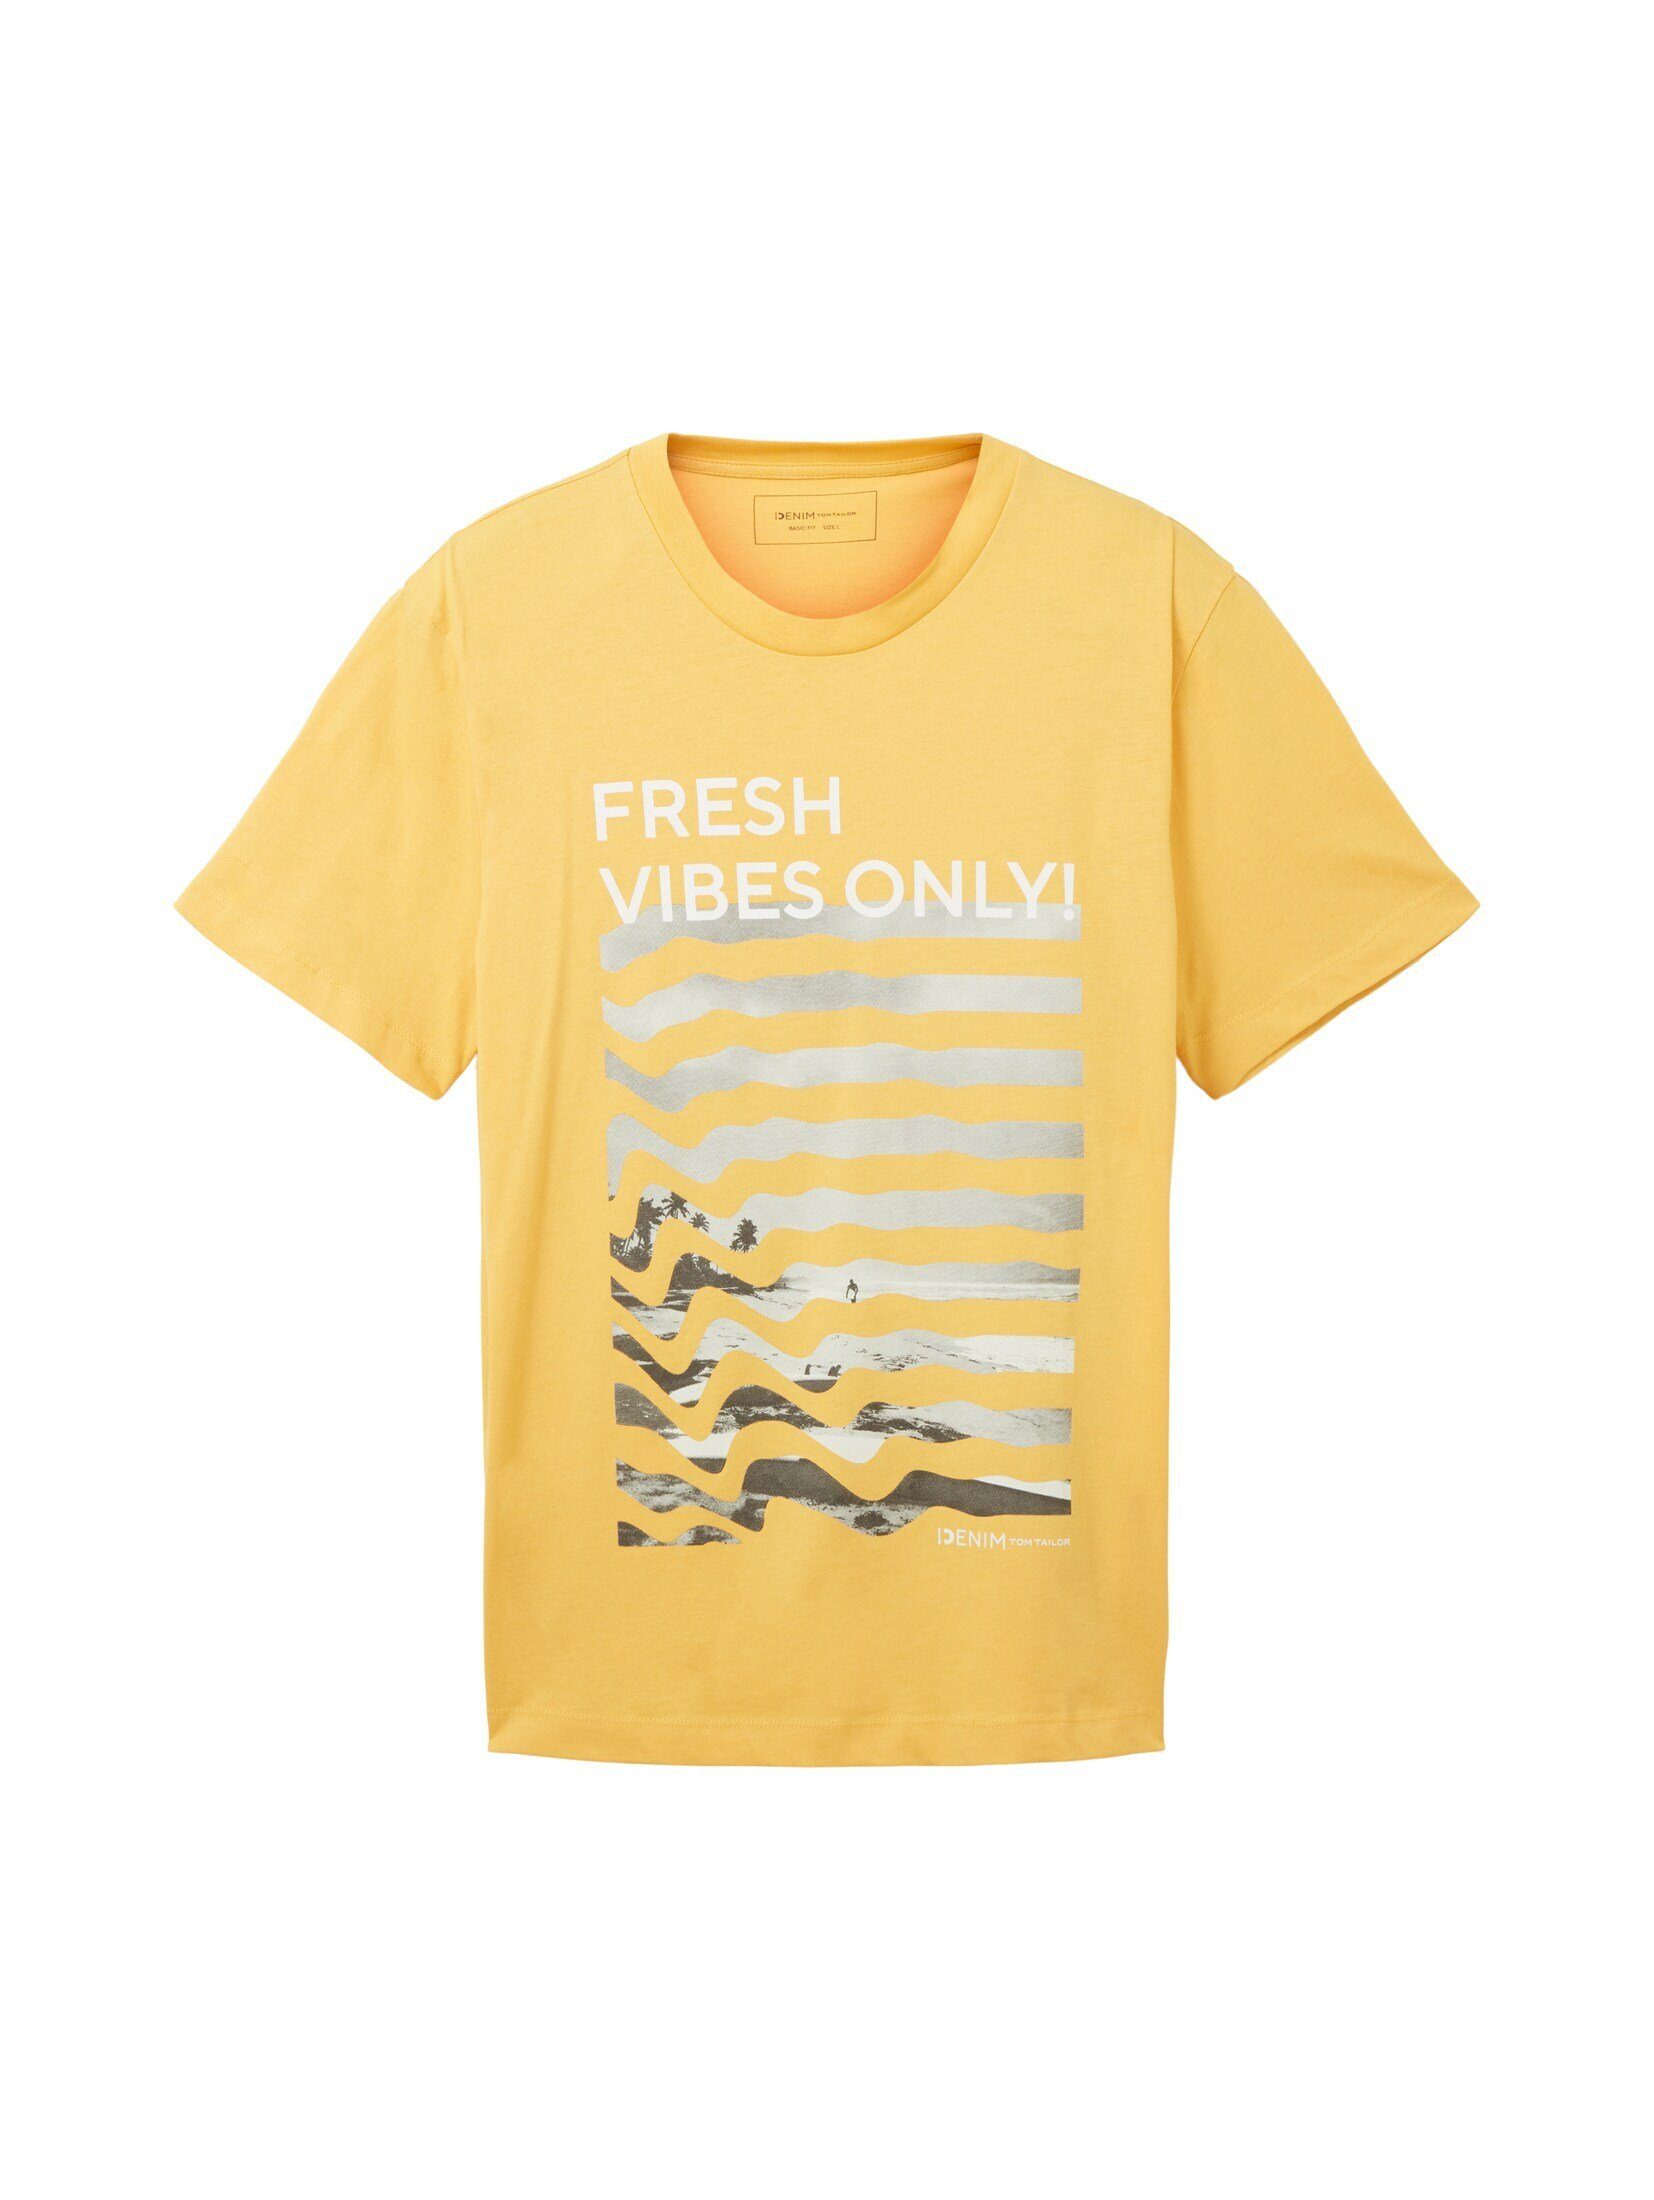 Fotoprint TOM fusion T-Shirt TAILOR mit Denim sun T-Shirt